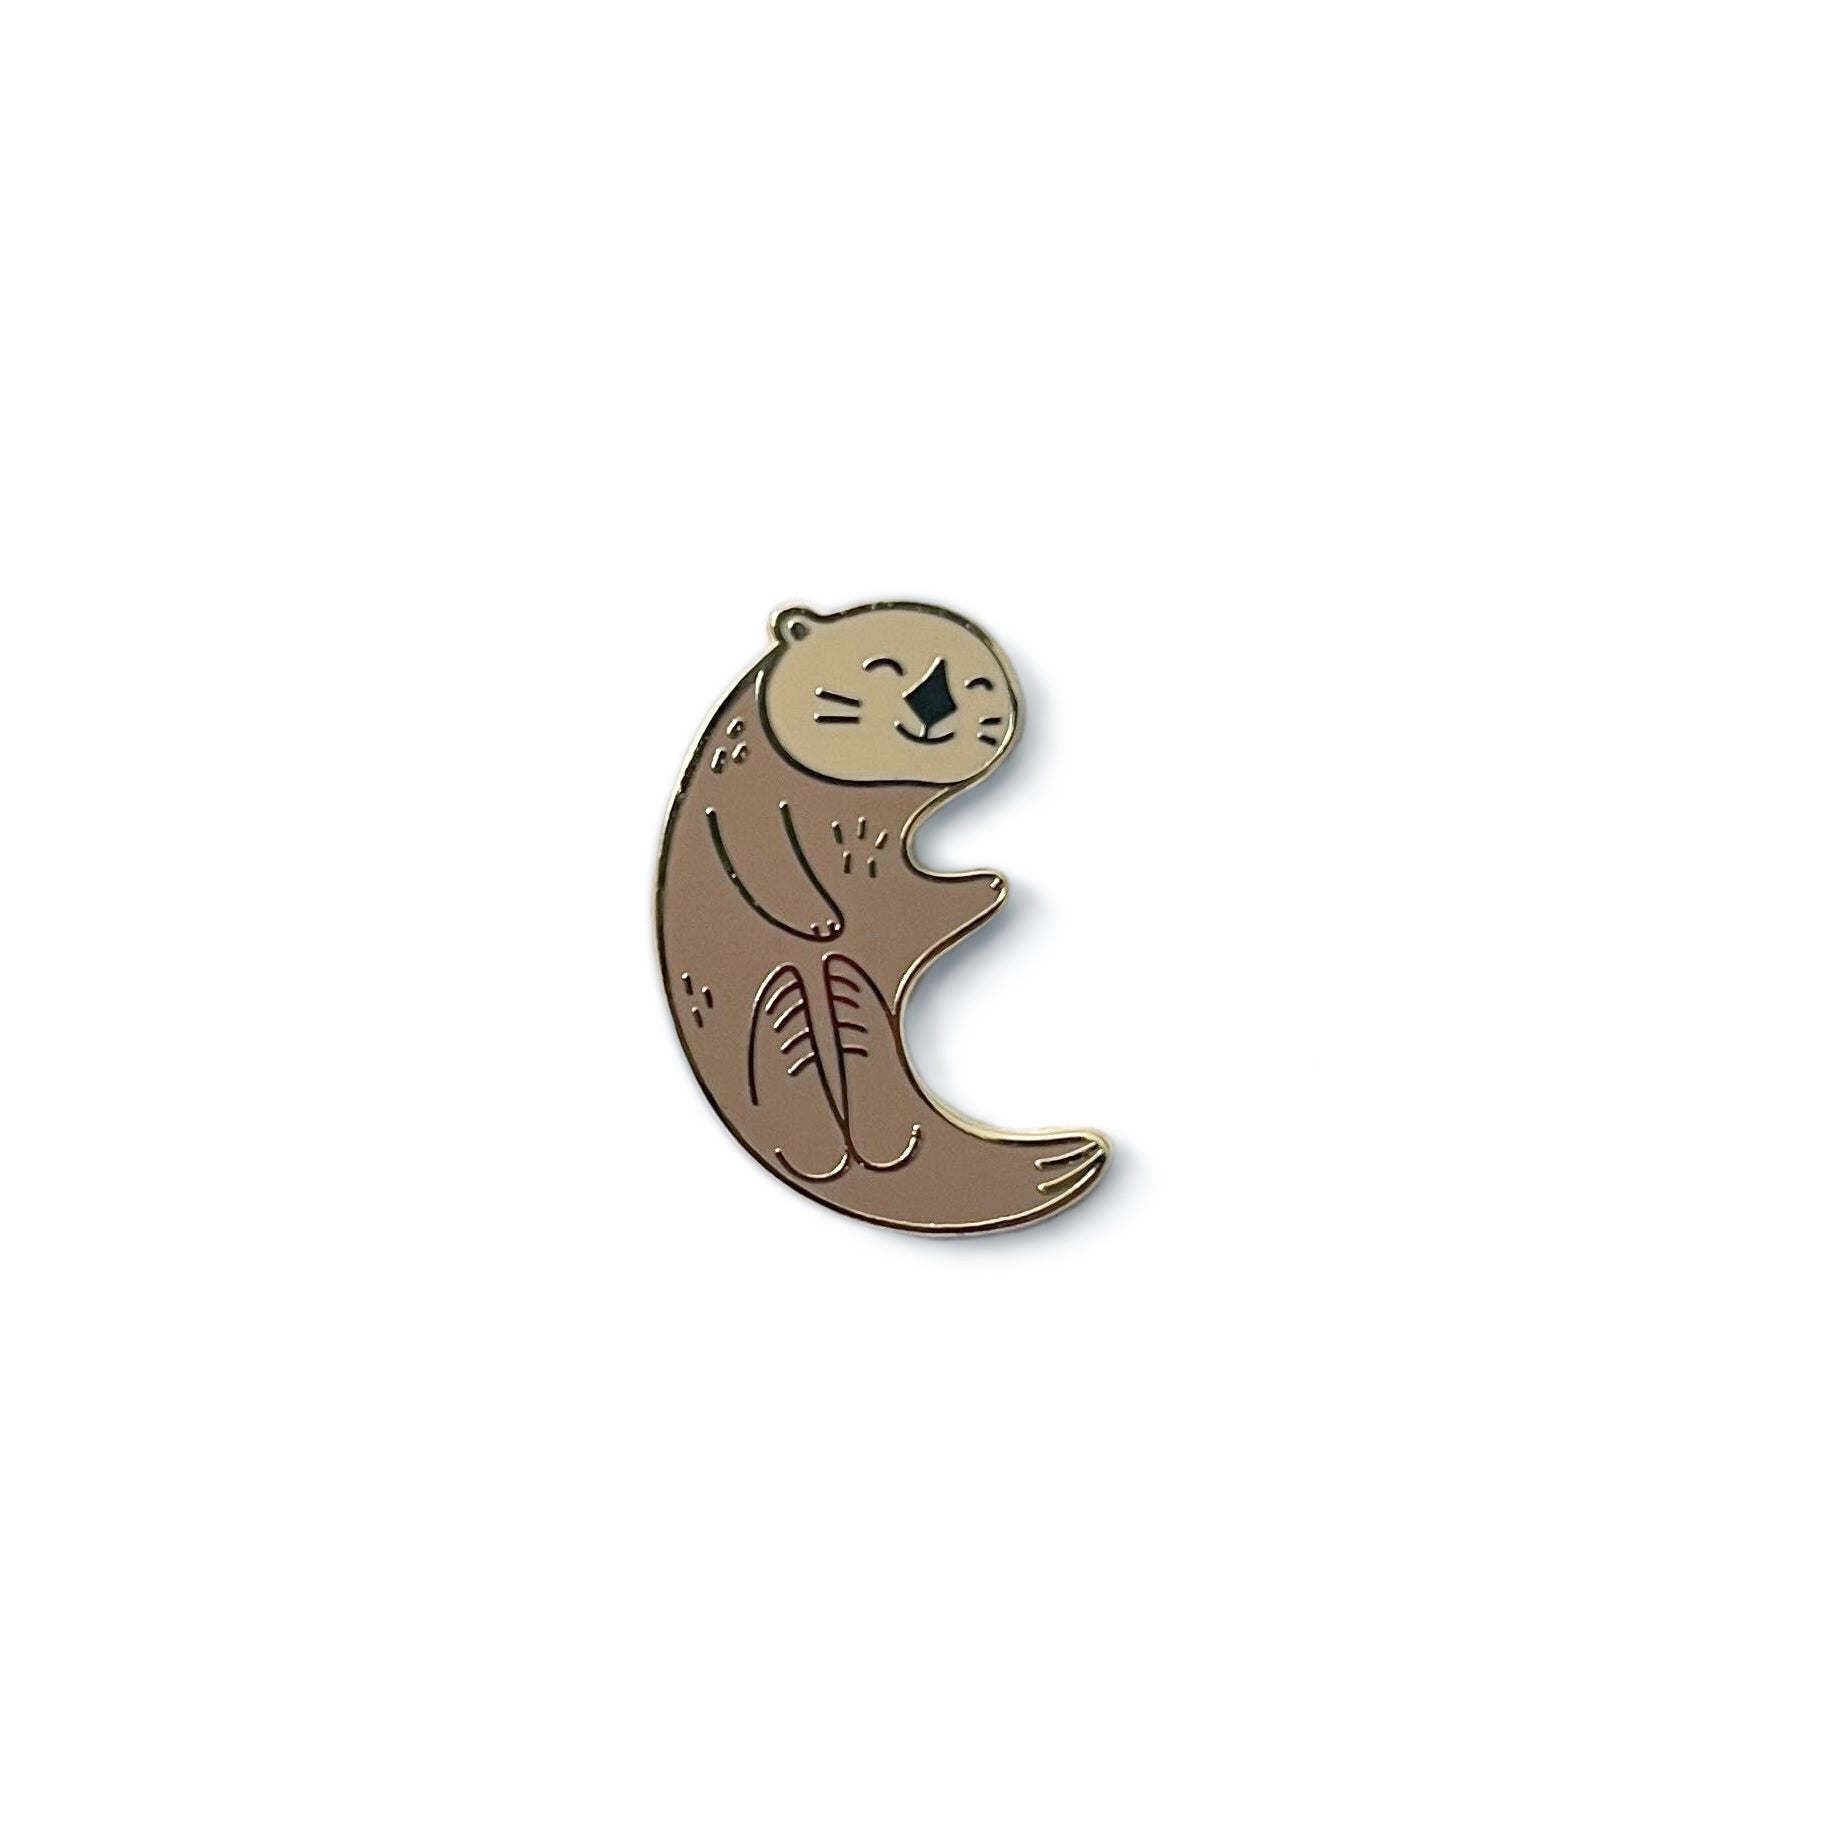 Vidra / Otter pin